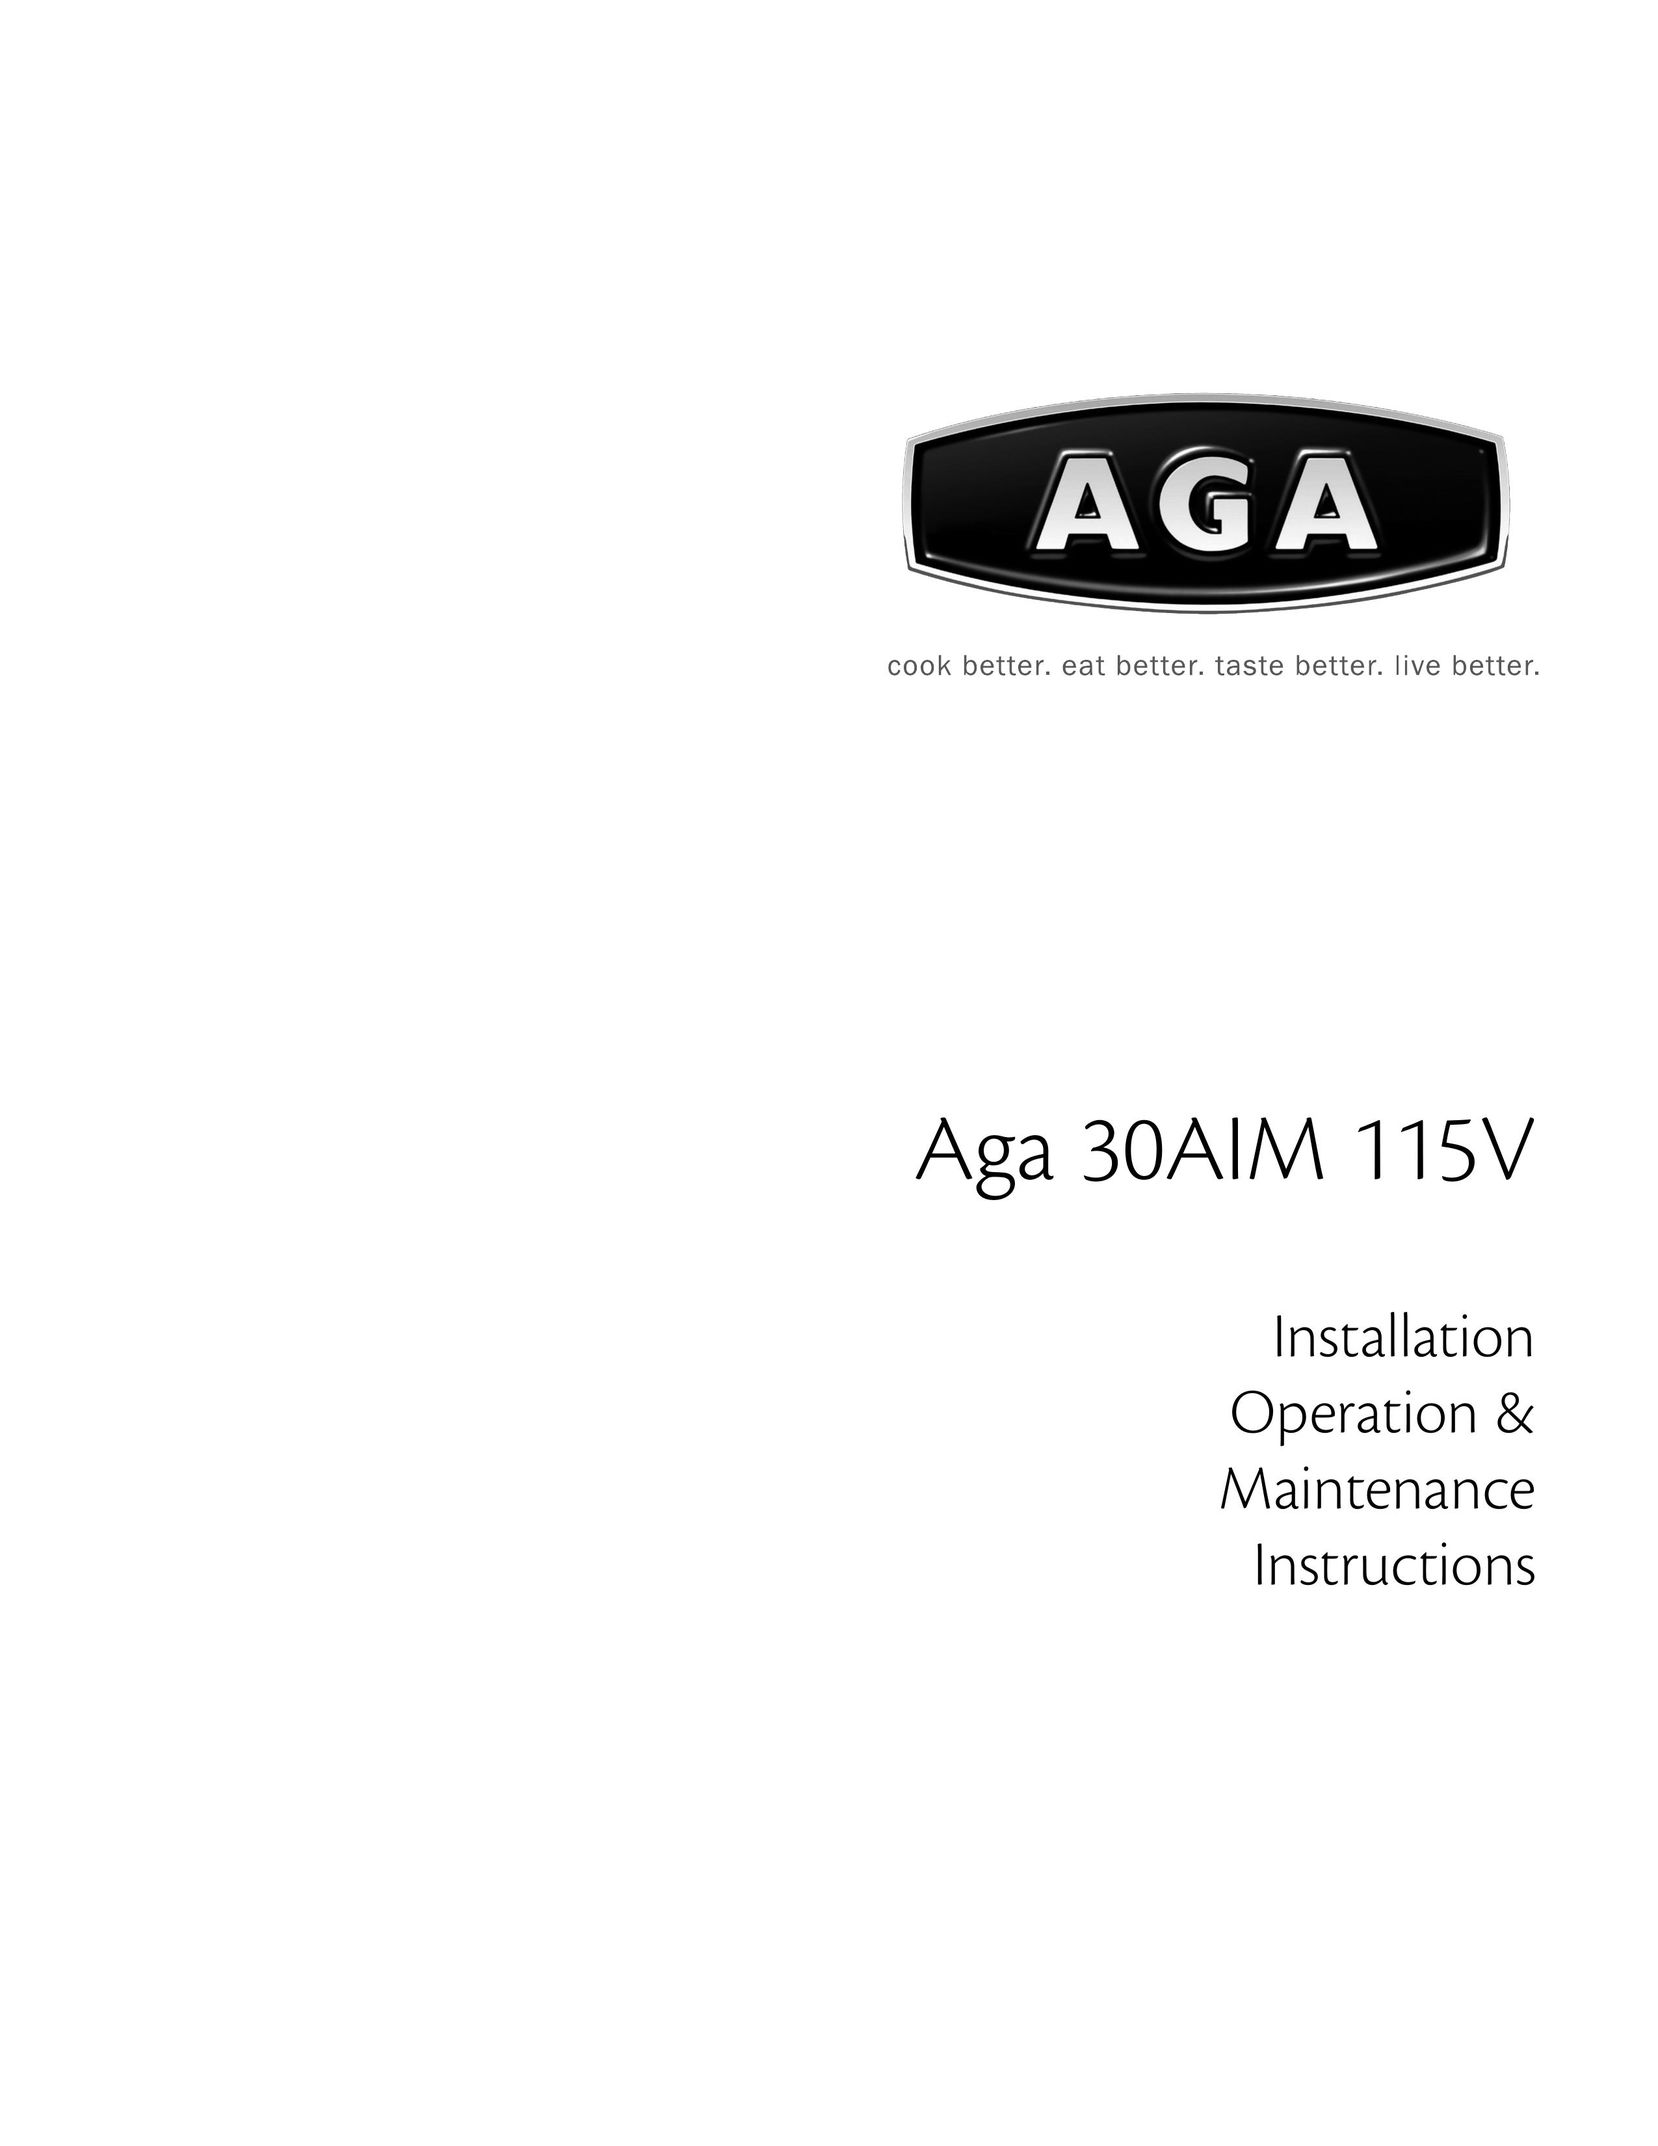 Aga Ranges Aga 30AIM 115V Ice Maker User Manual